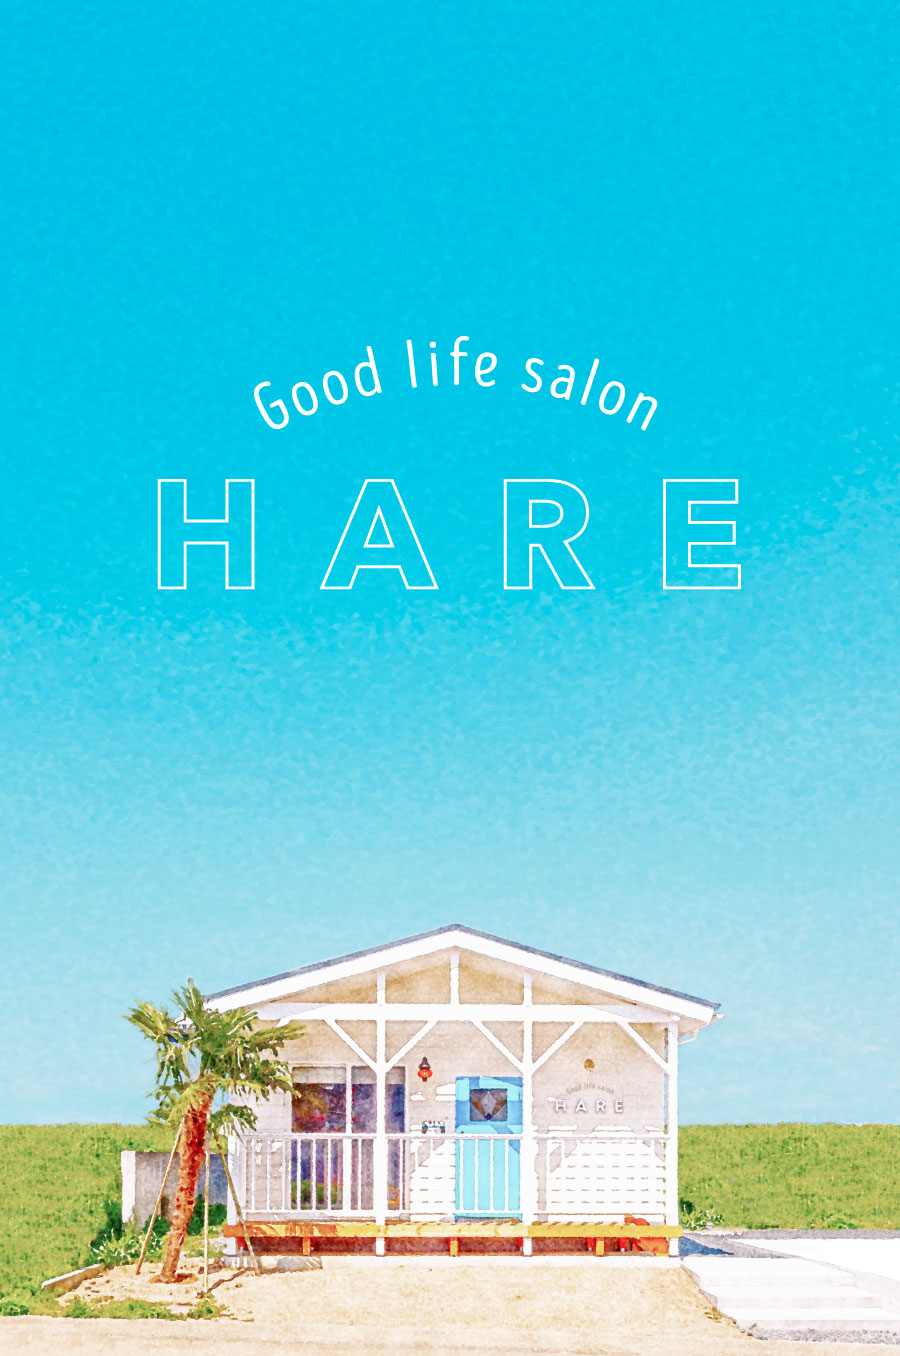 Good life salon HARE